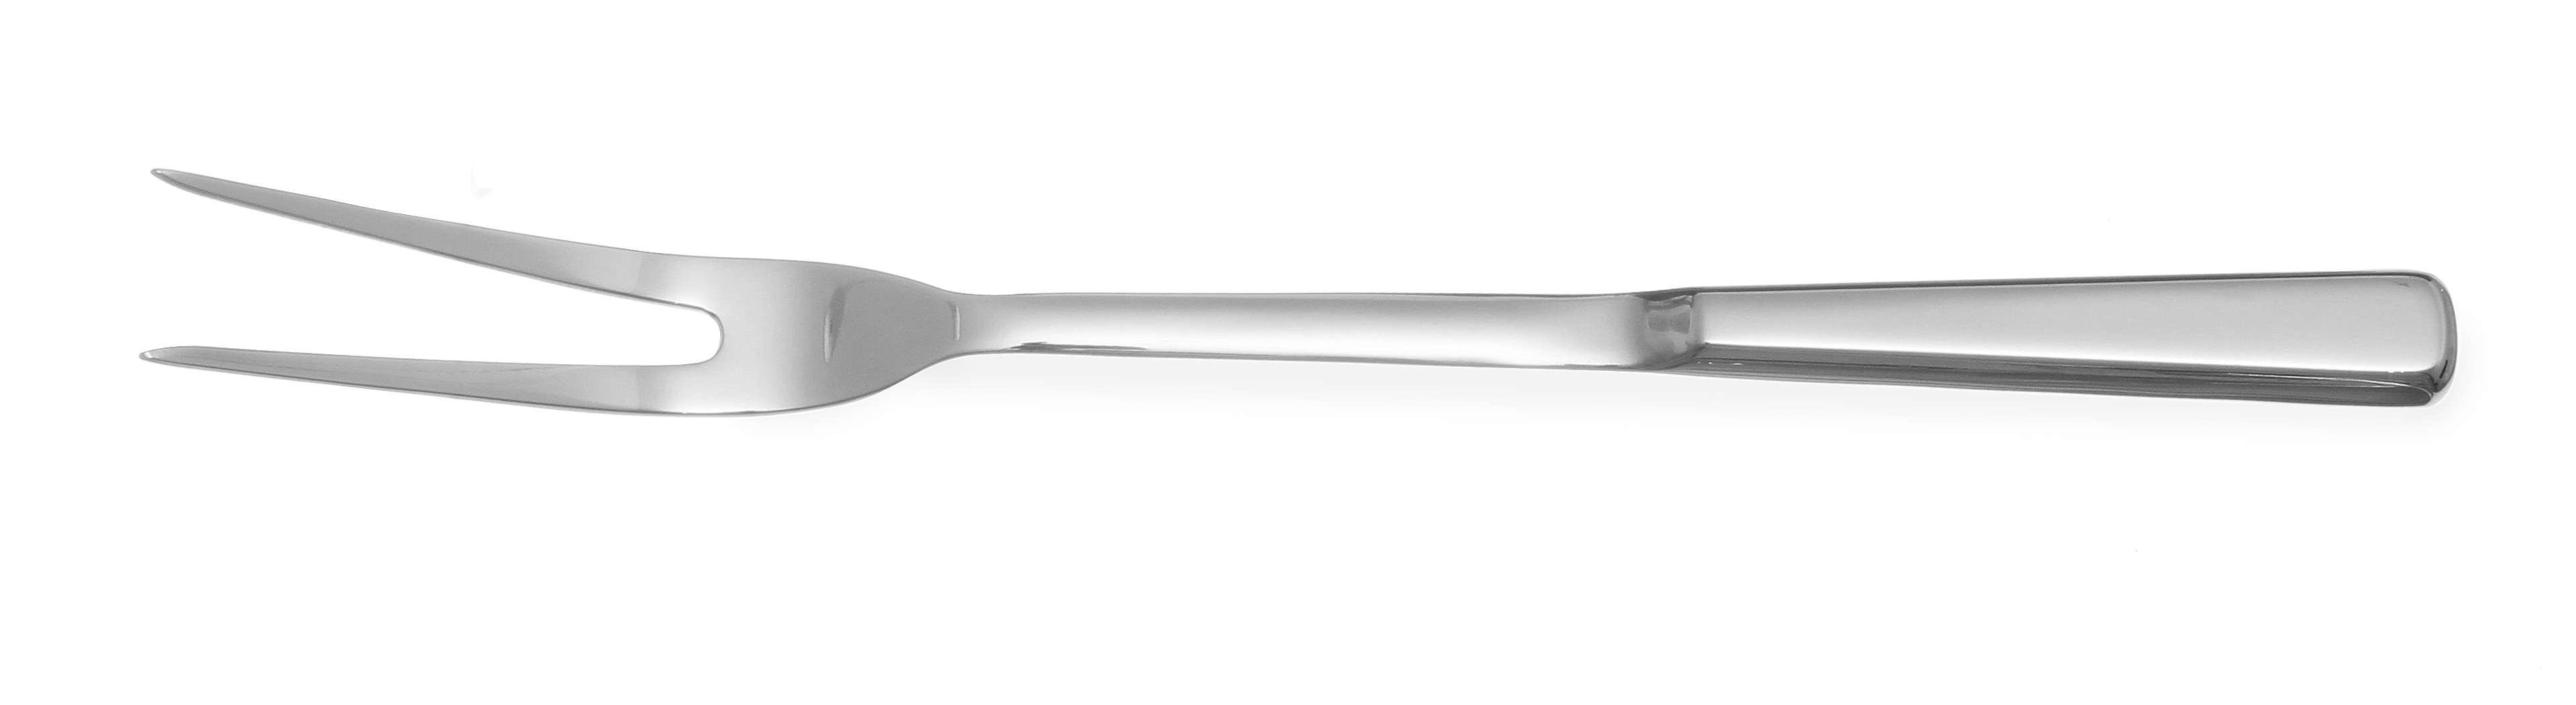 Cepillo metálico - HENDI Tools for Chefs